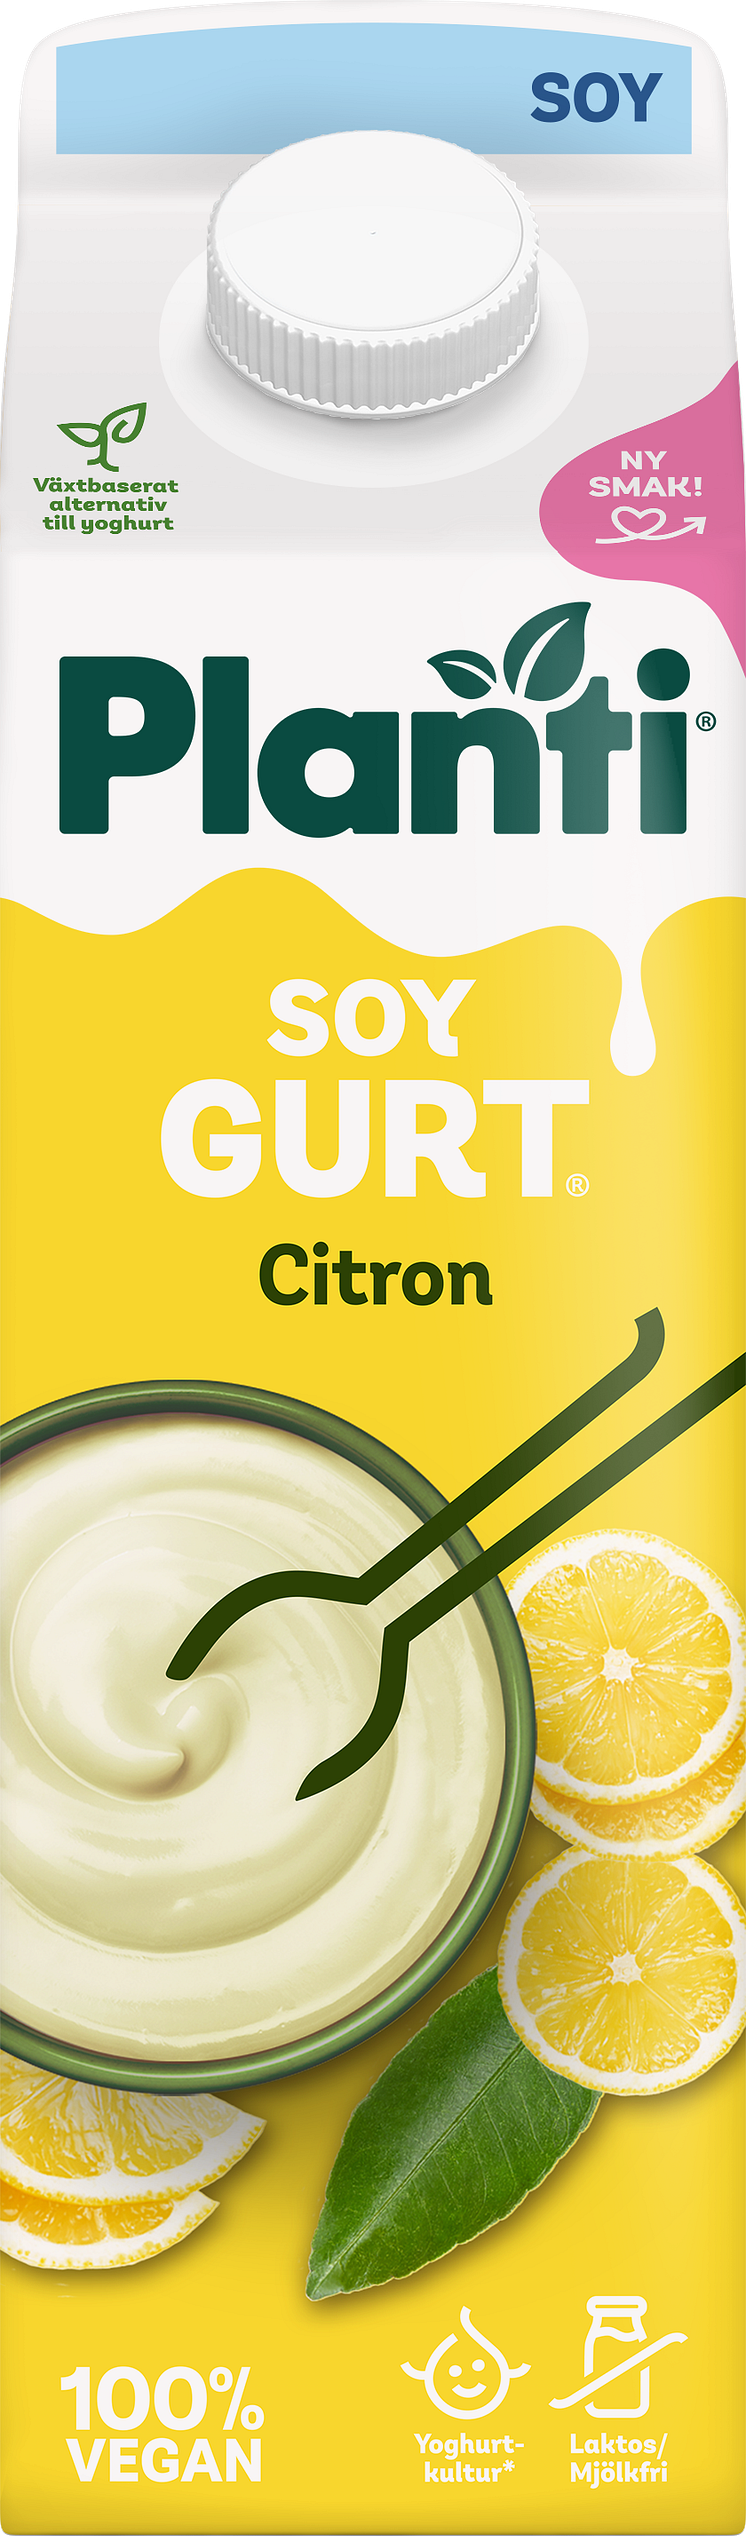 Planti Soygurt Citron 1000g